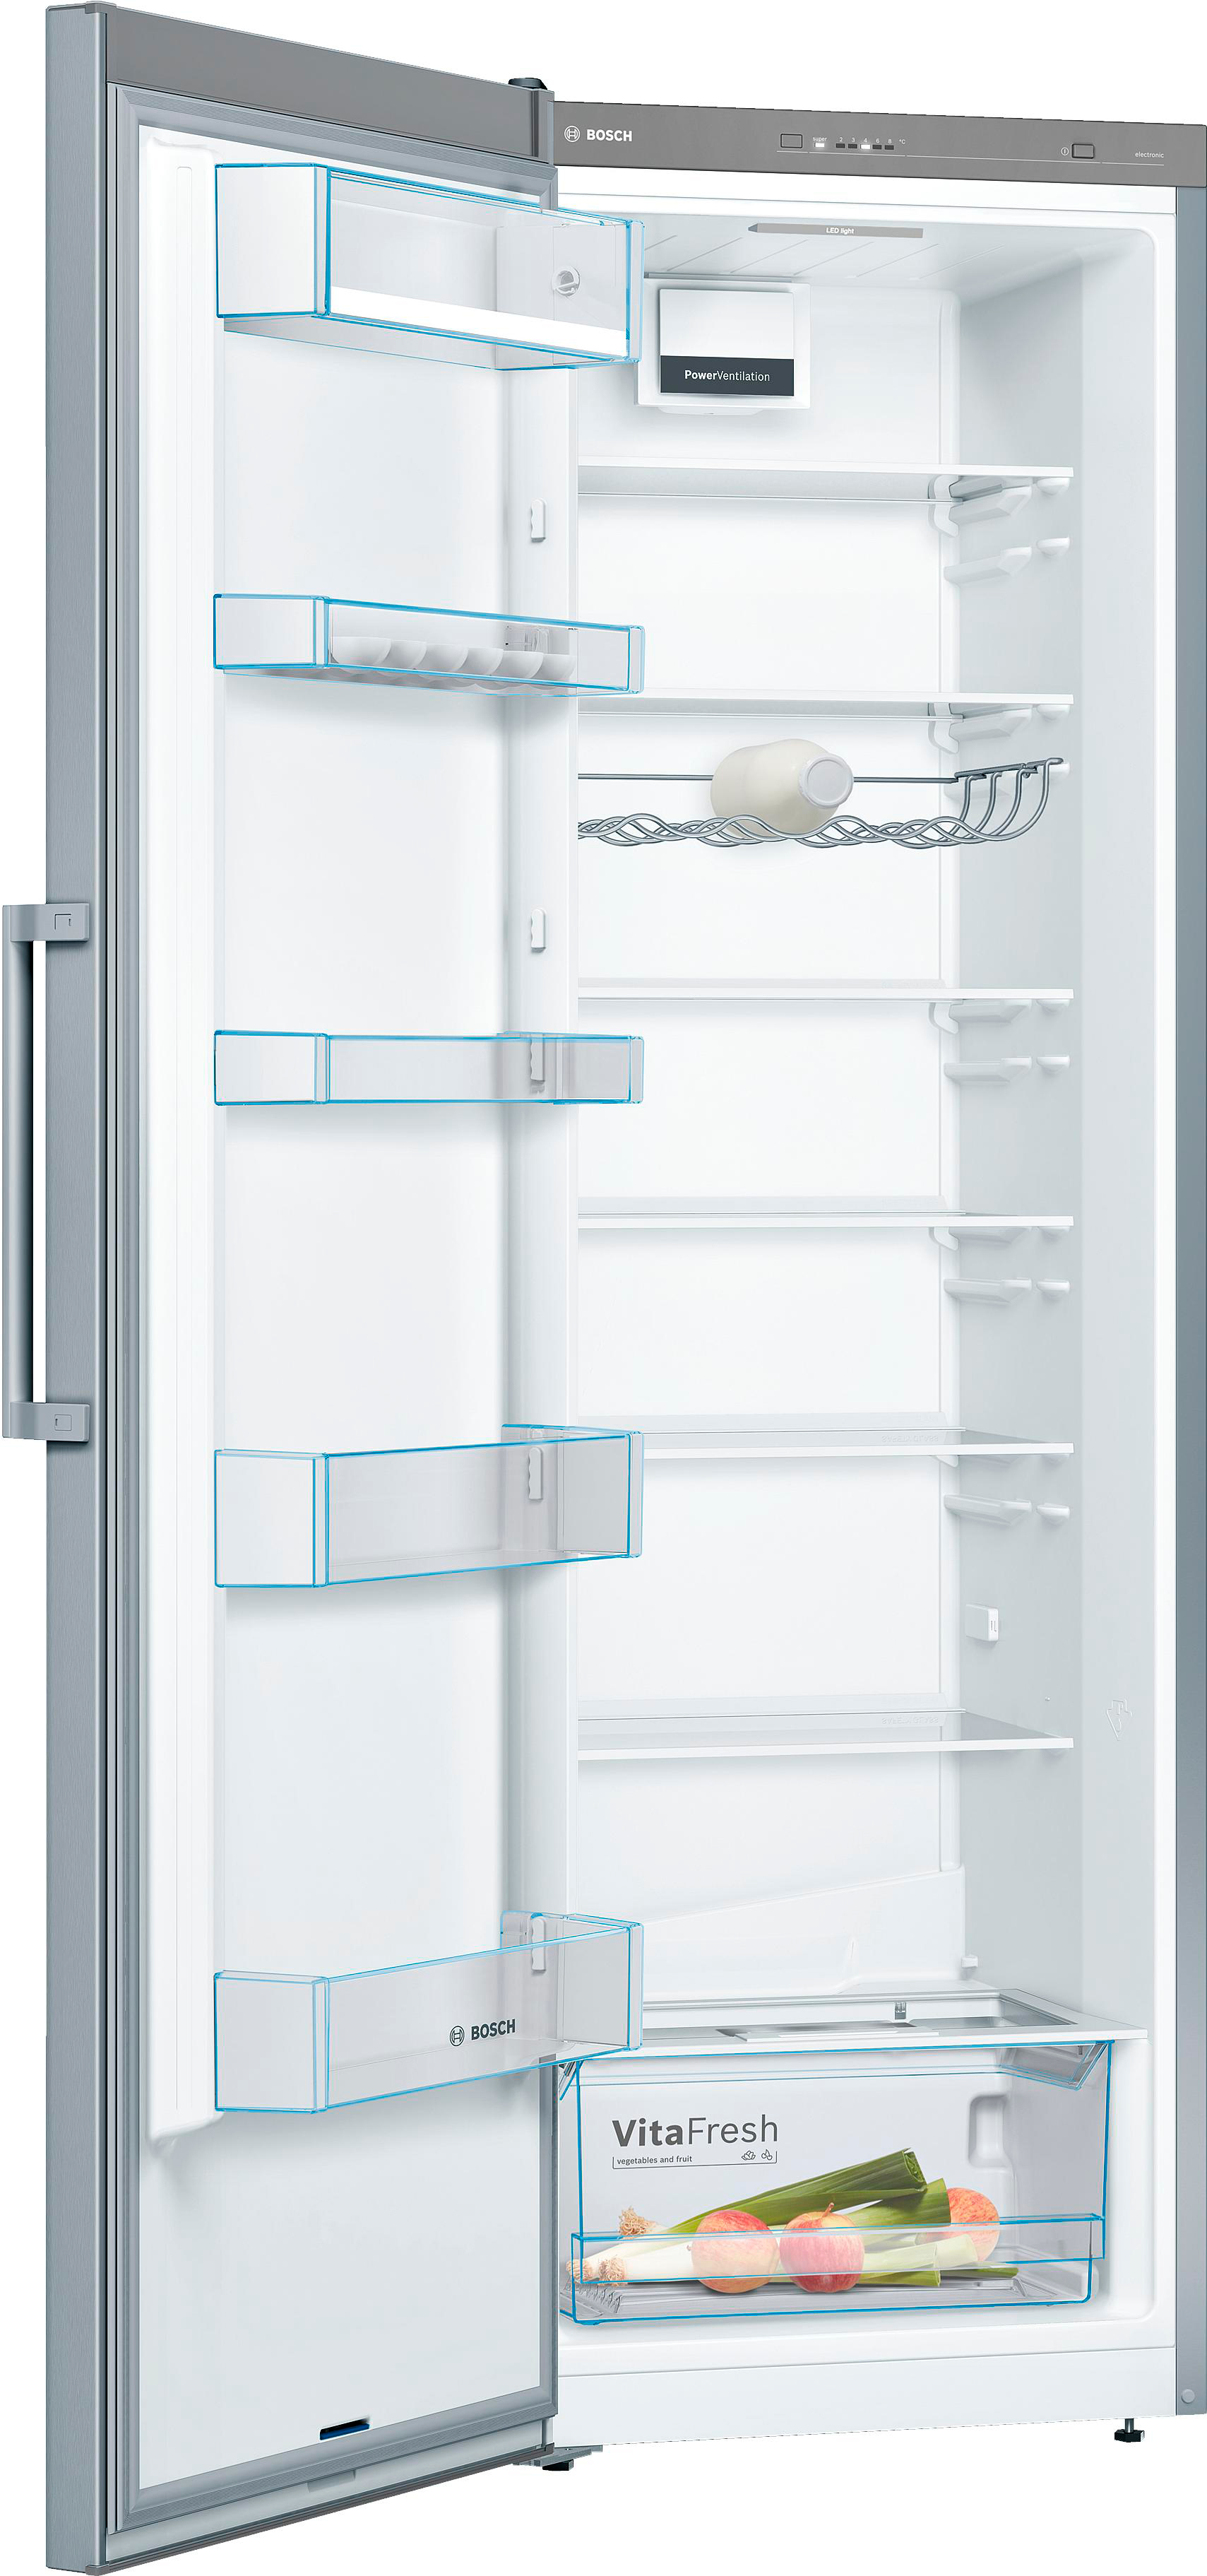 Холодильник Bosch KSV36VL30U цена 51100.00 грн - фотография 2